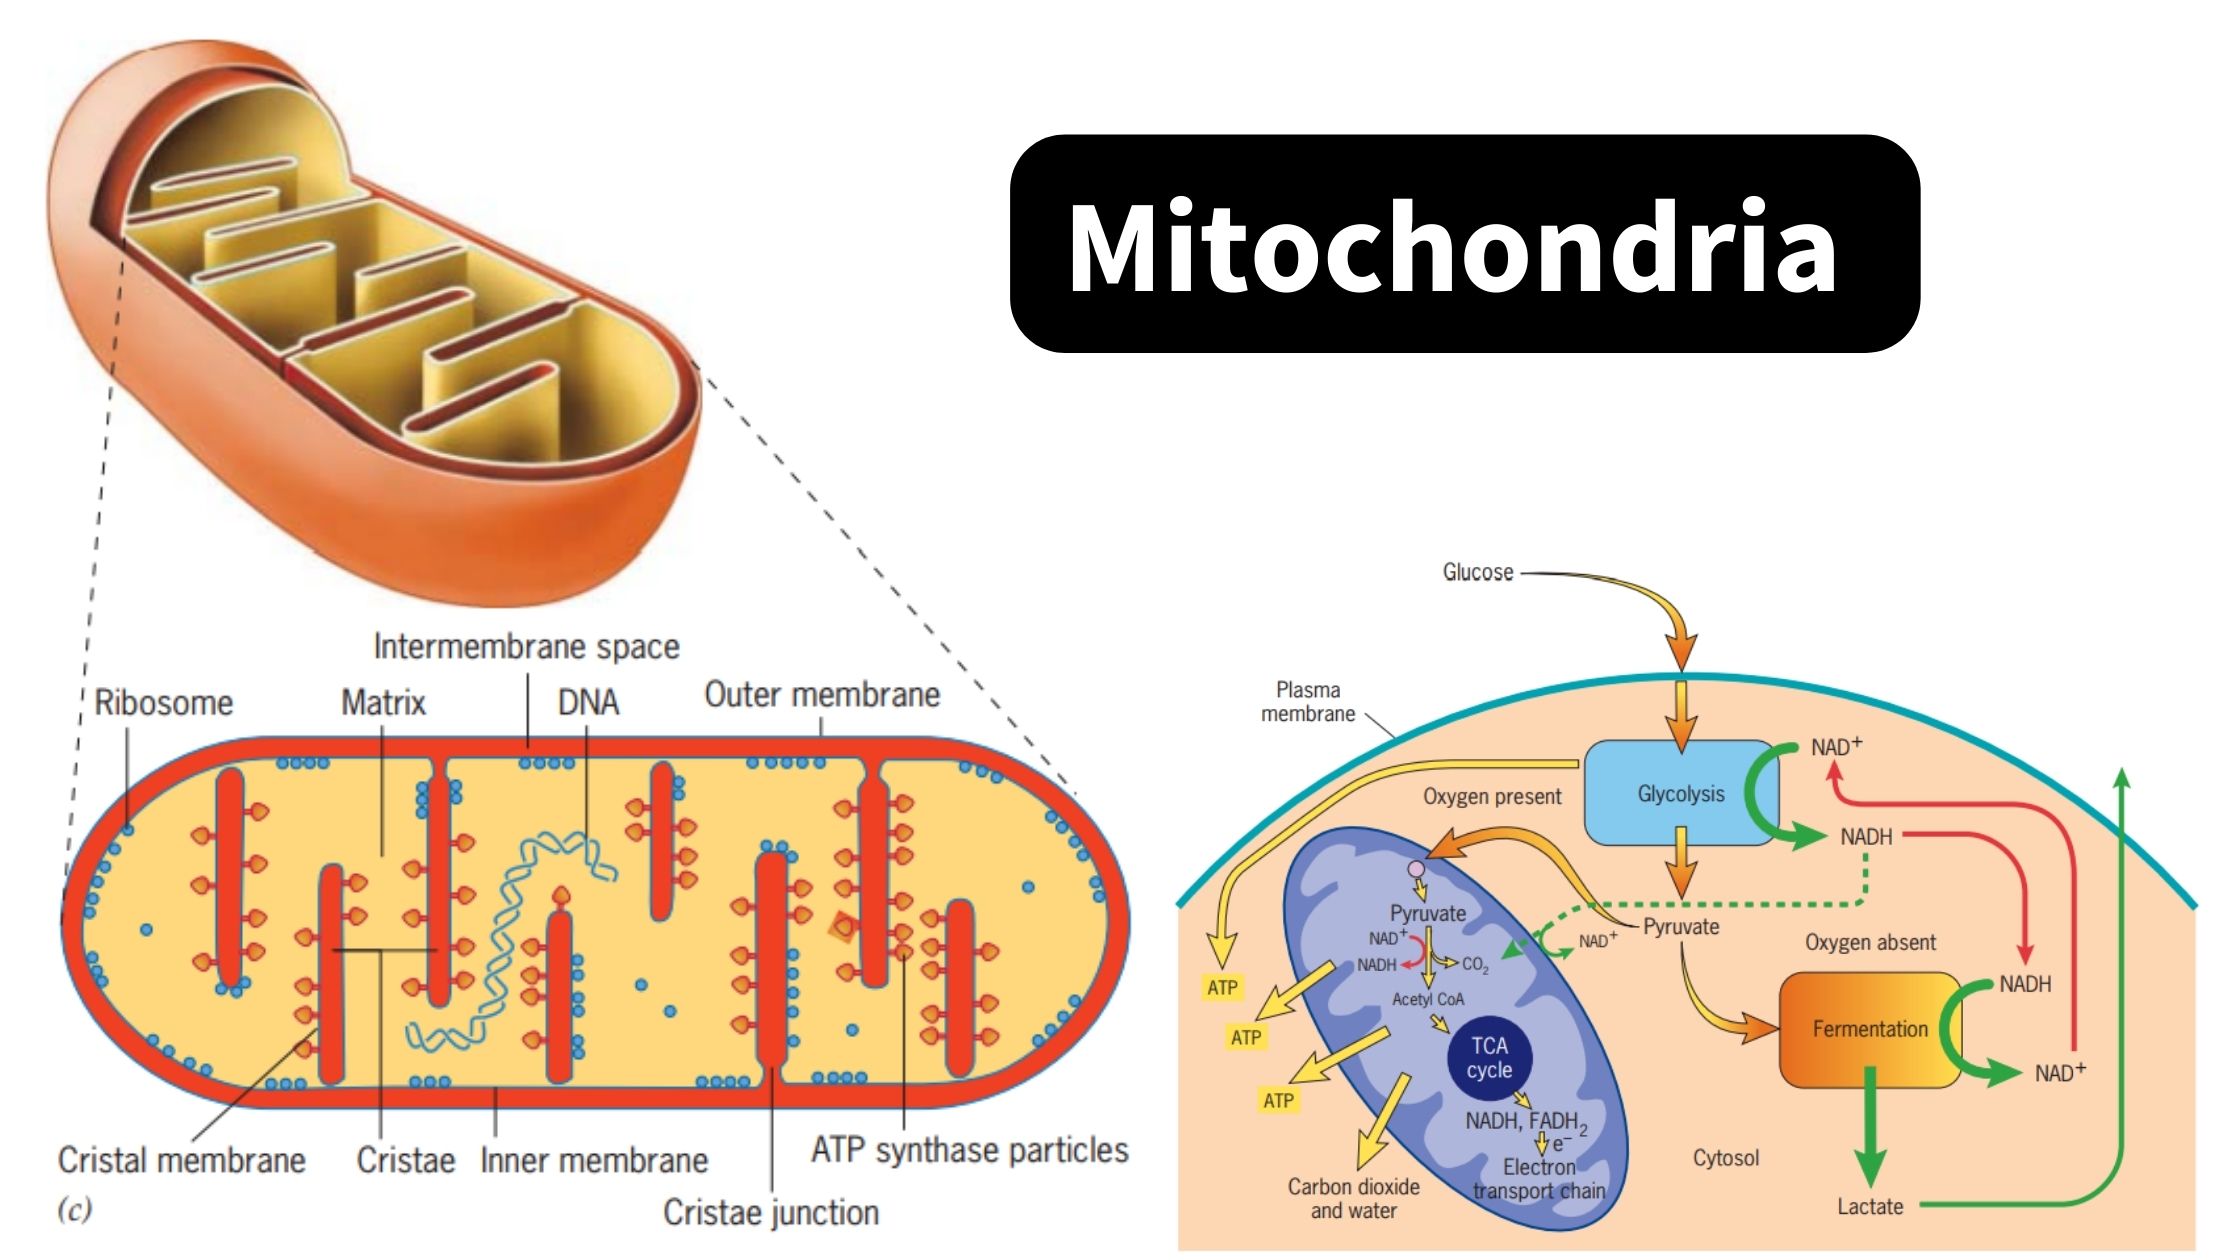 Mitochondria - Definition, Structure, Functions, Origin